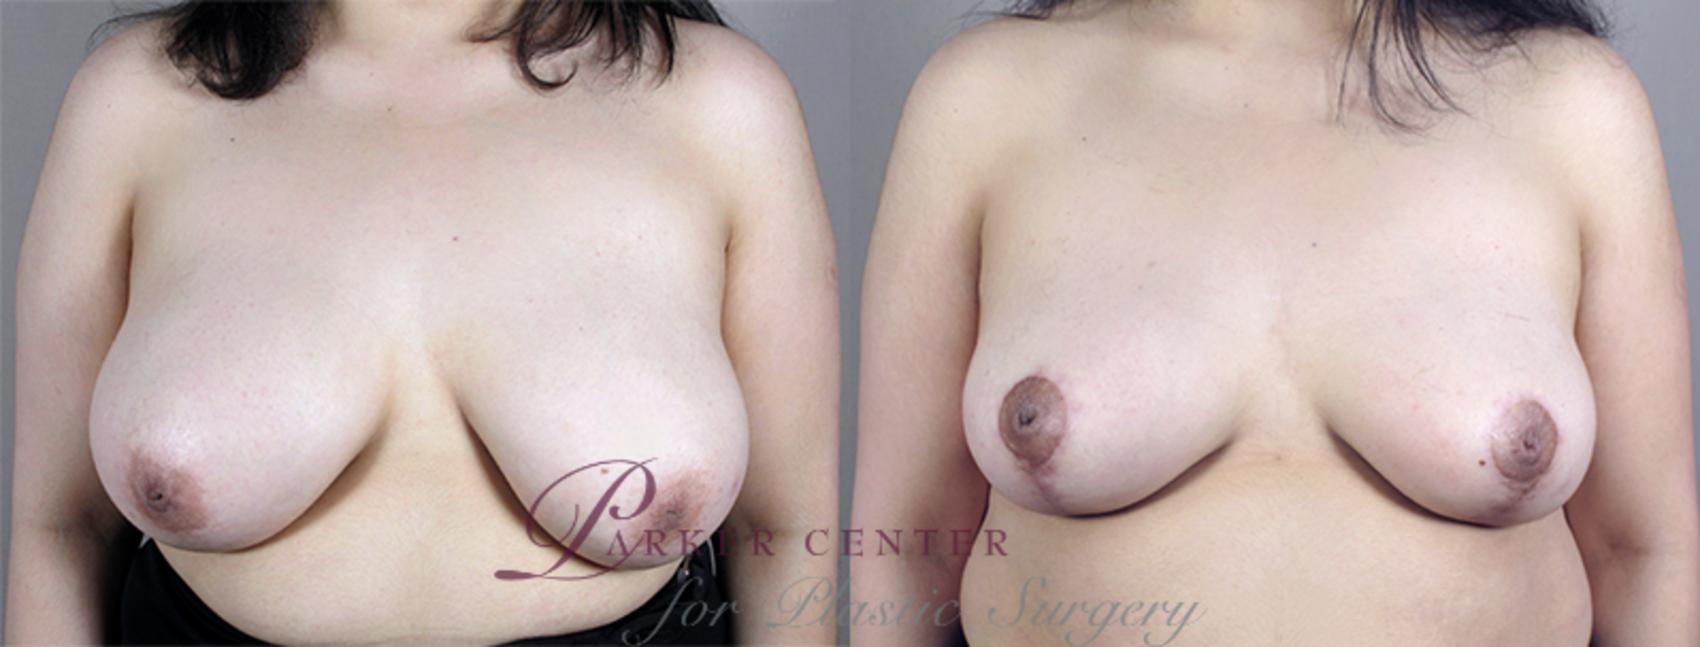 Breast Lift Case 512 Before & After View #1 | Paramus, NJ | Parker Center for Plastic Surgery